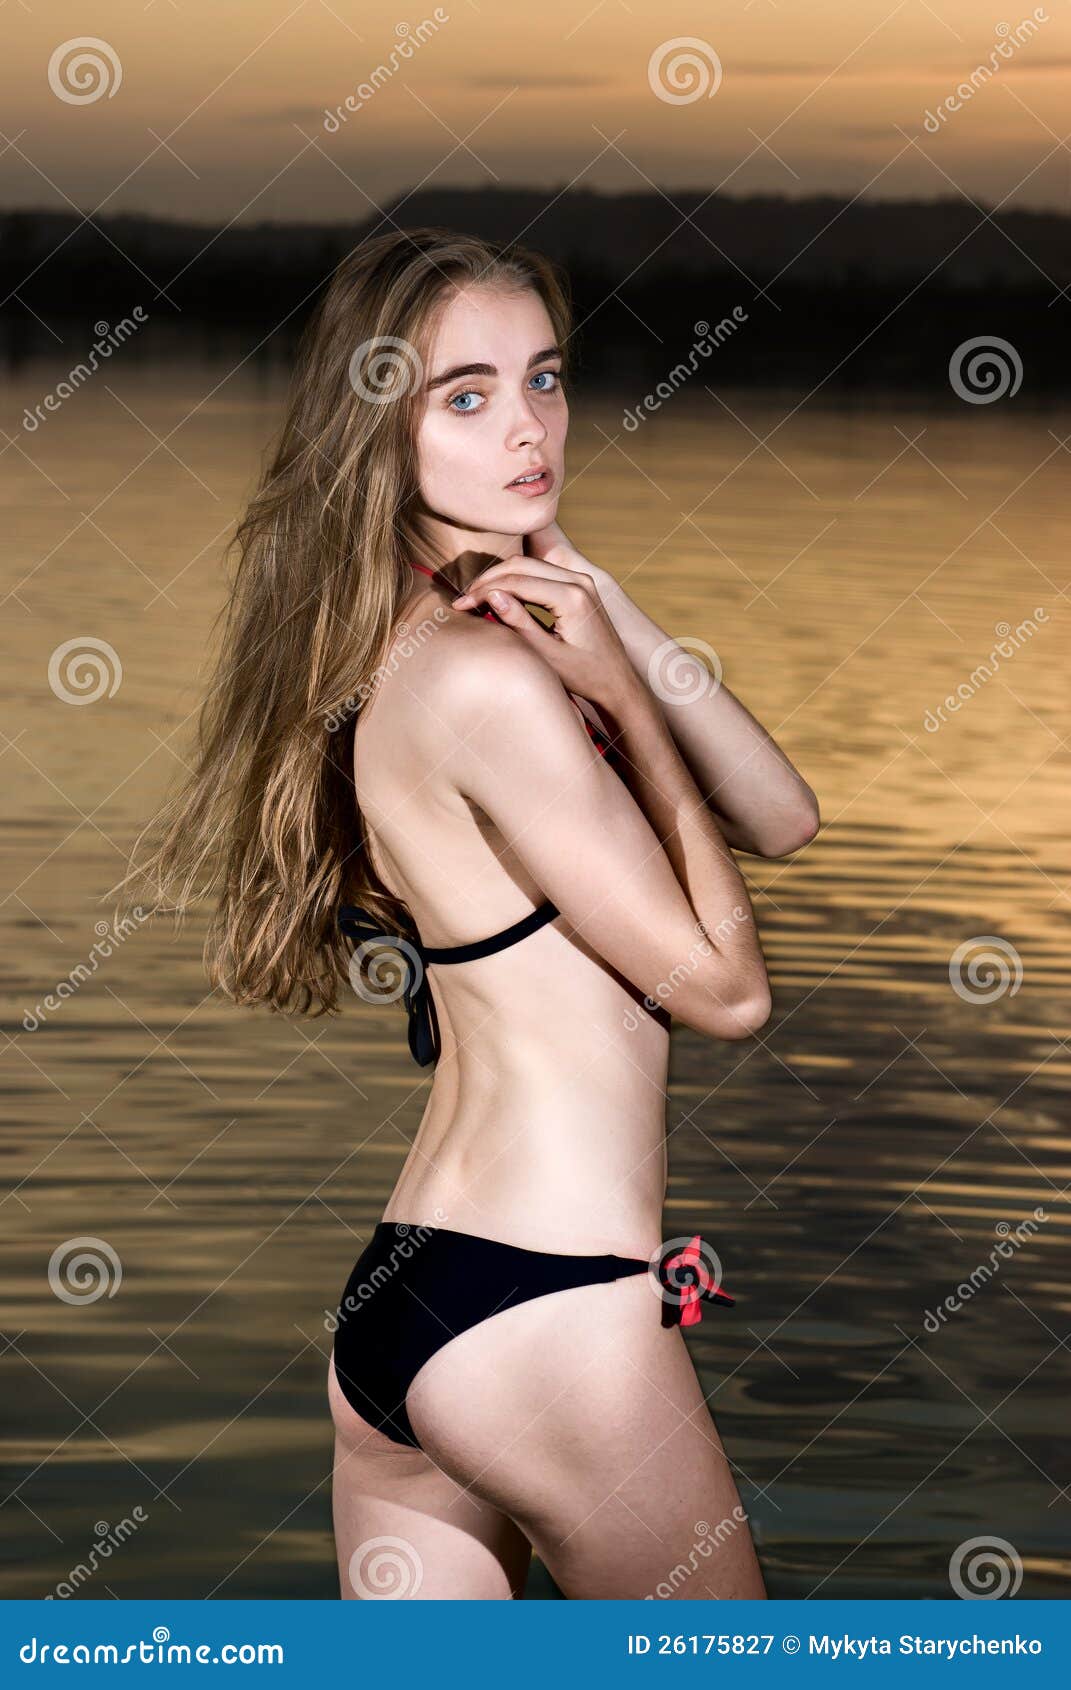 devon naidoo share hot chicks in bikini pics photos